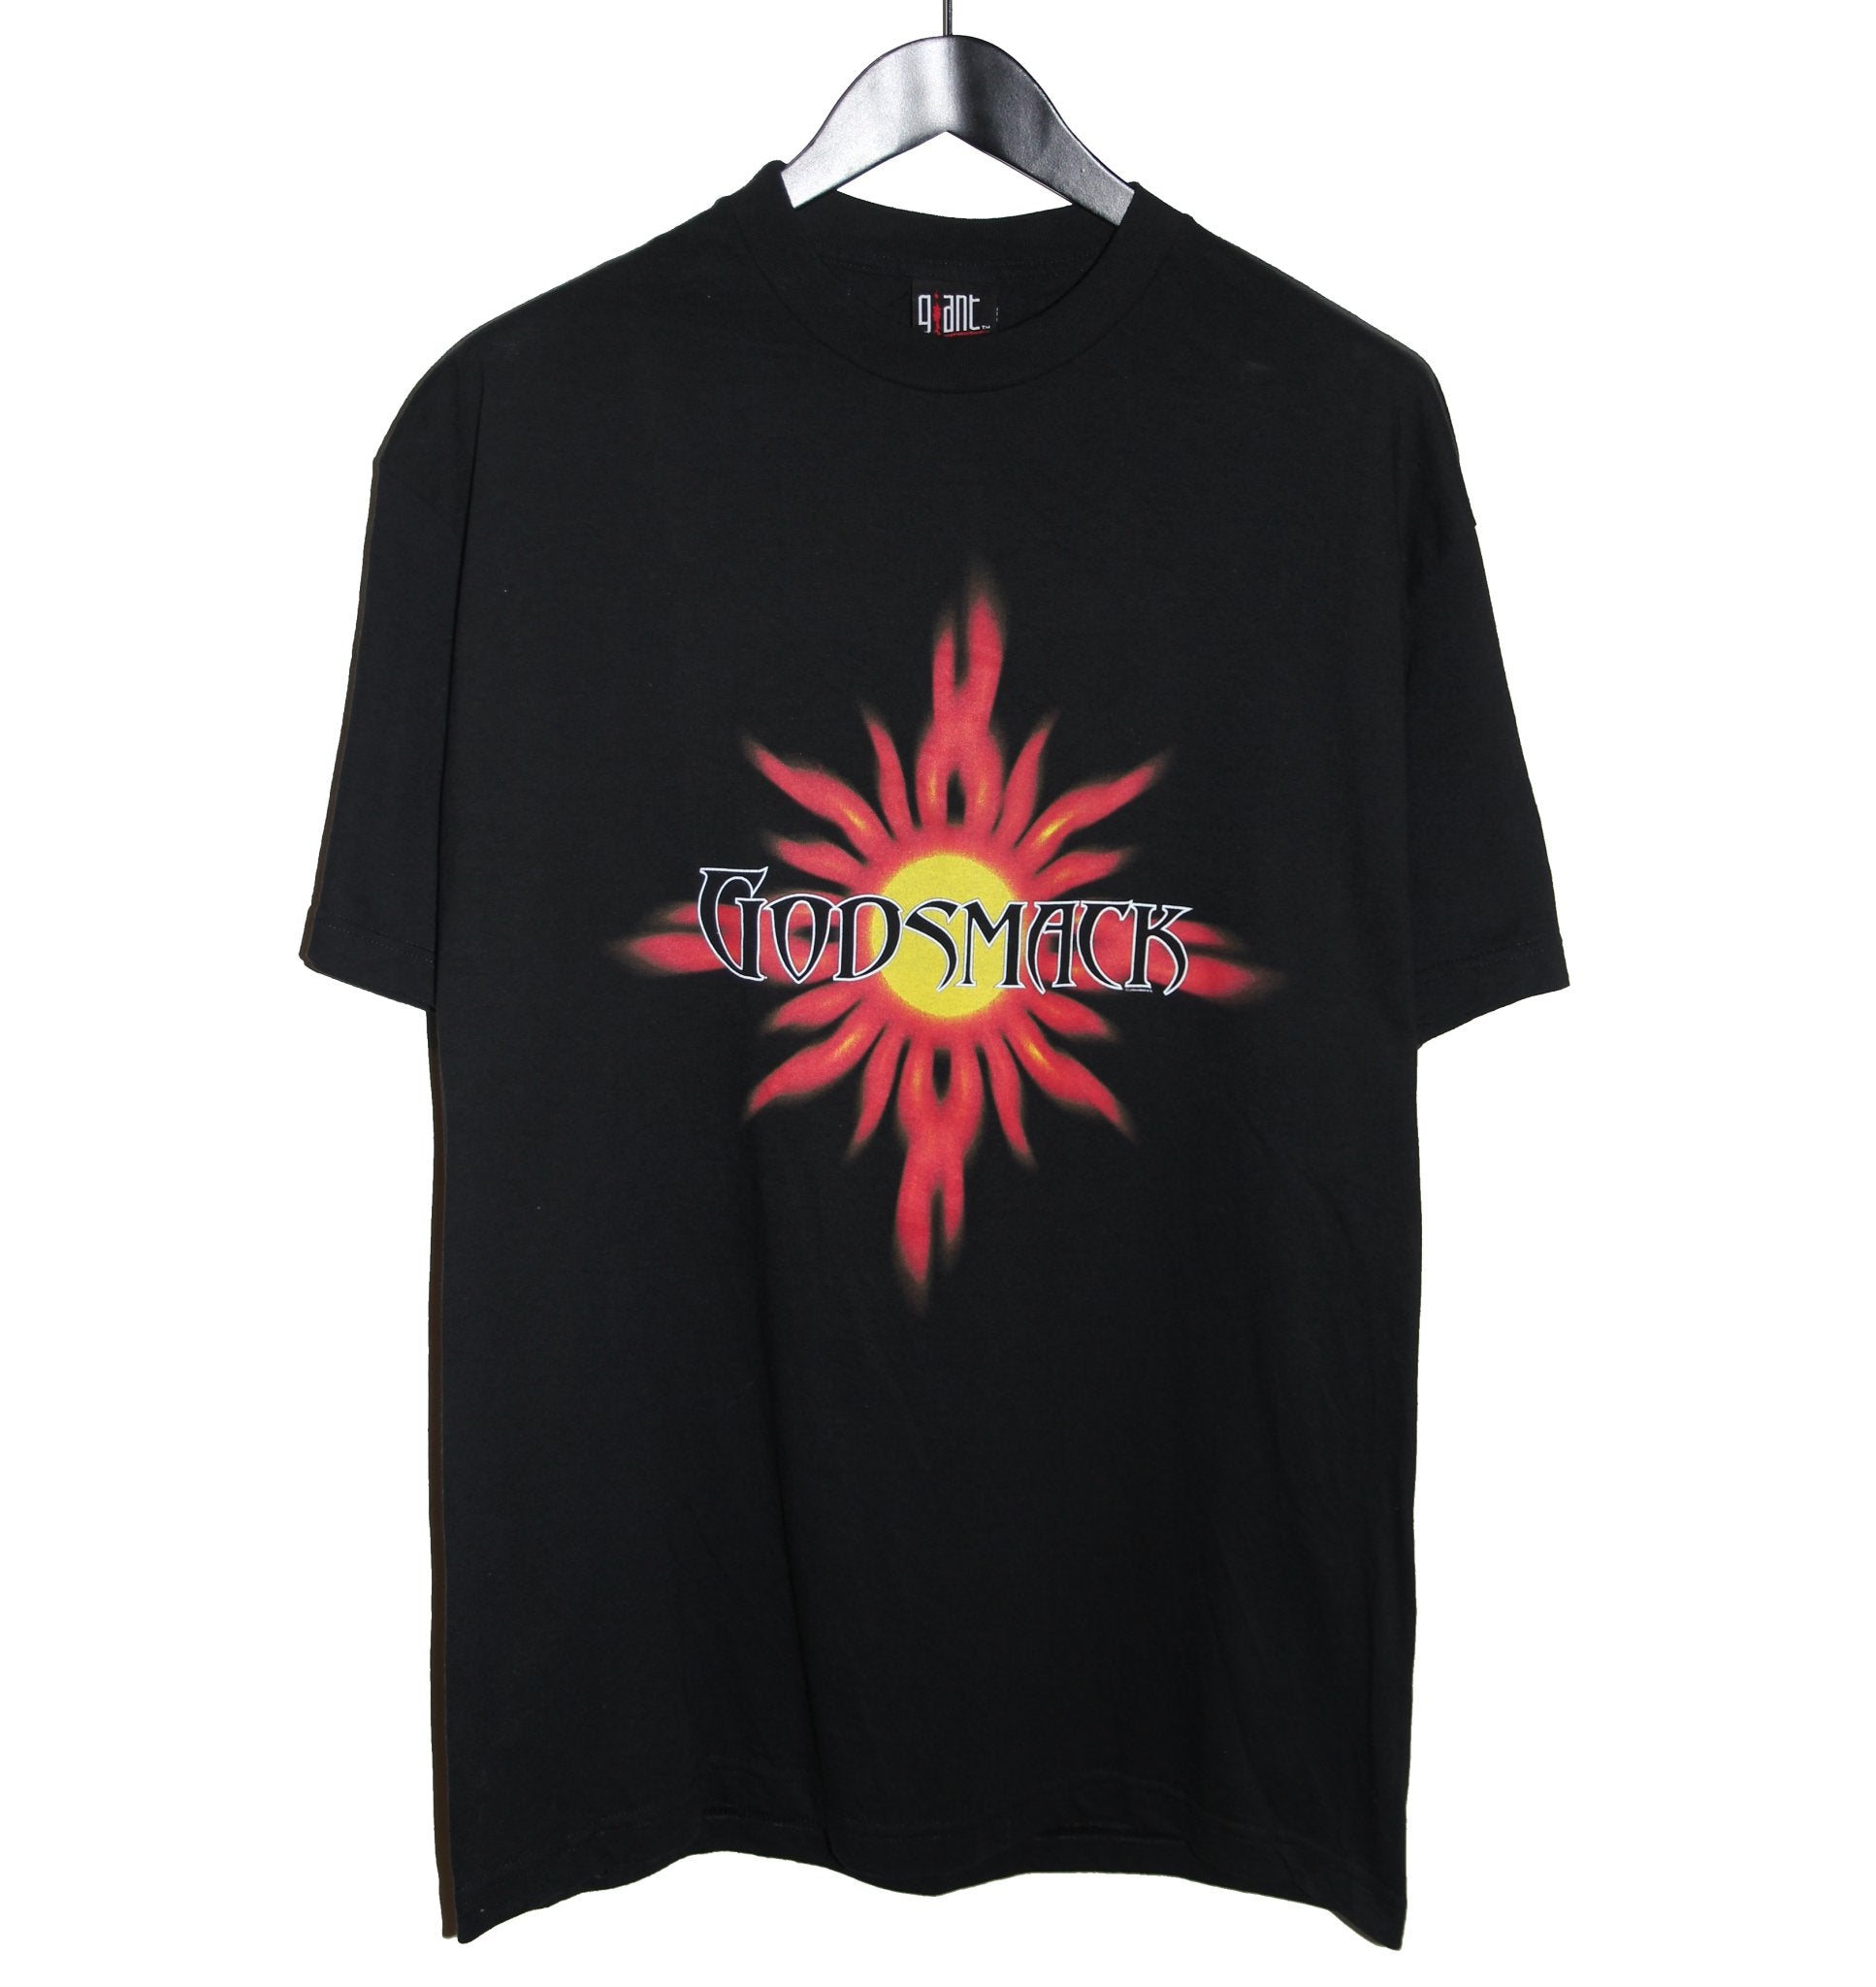 Godsmack 1998 Album Shirt - Faded AU